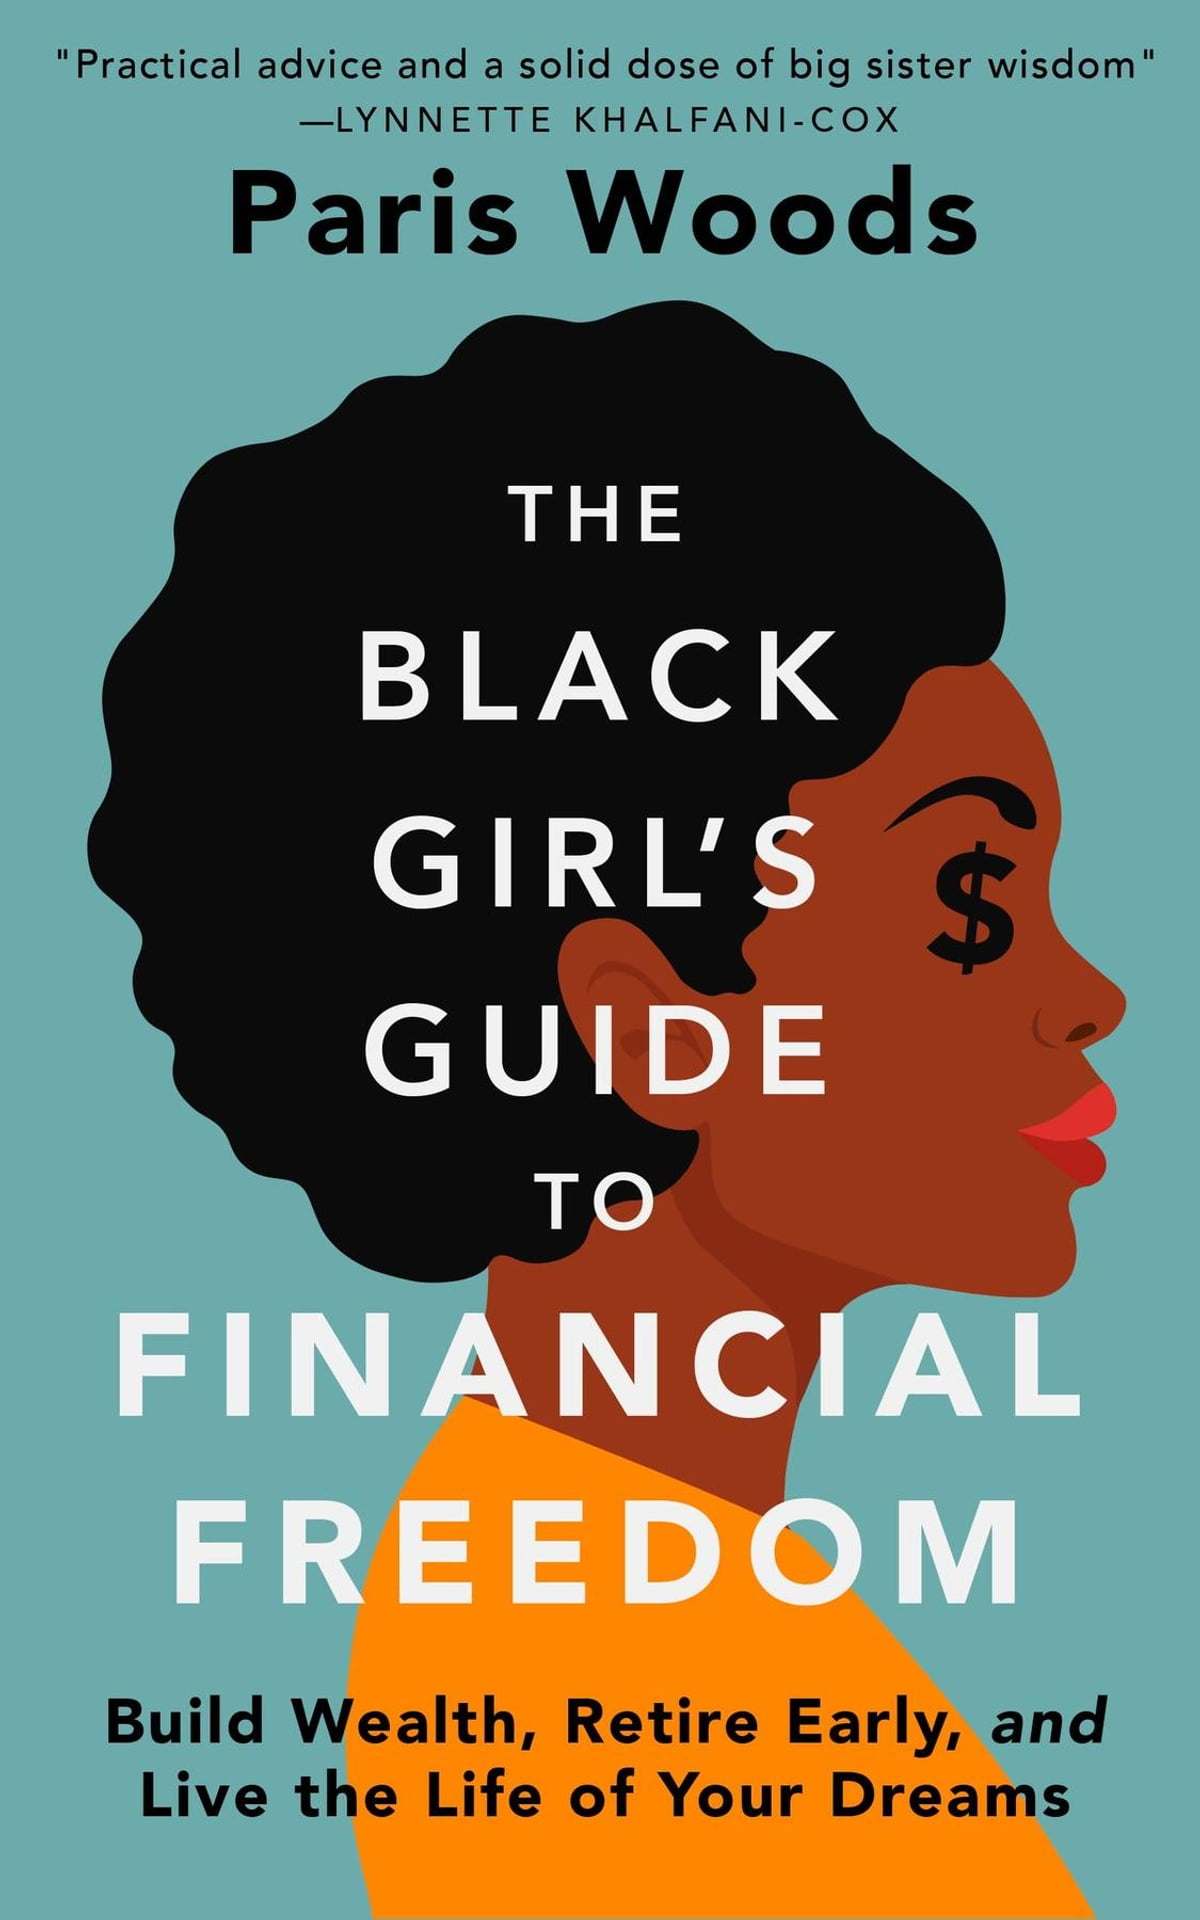 Empowering black women through financial freedom by Paris Woods